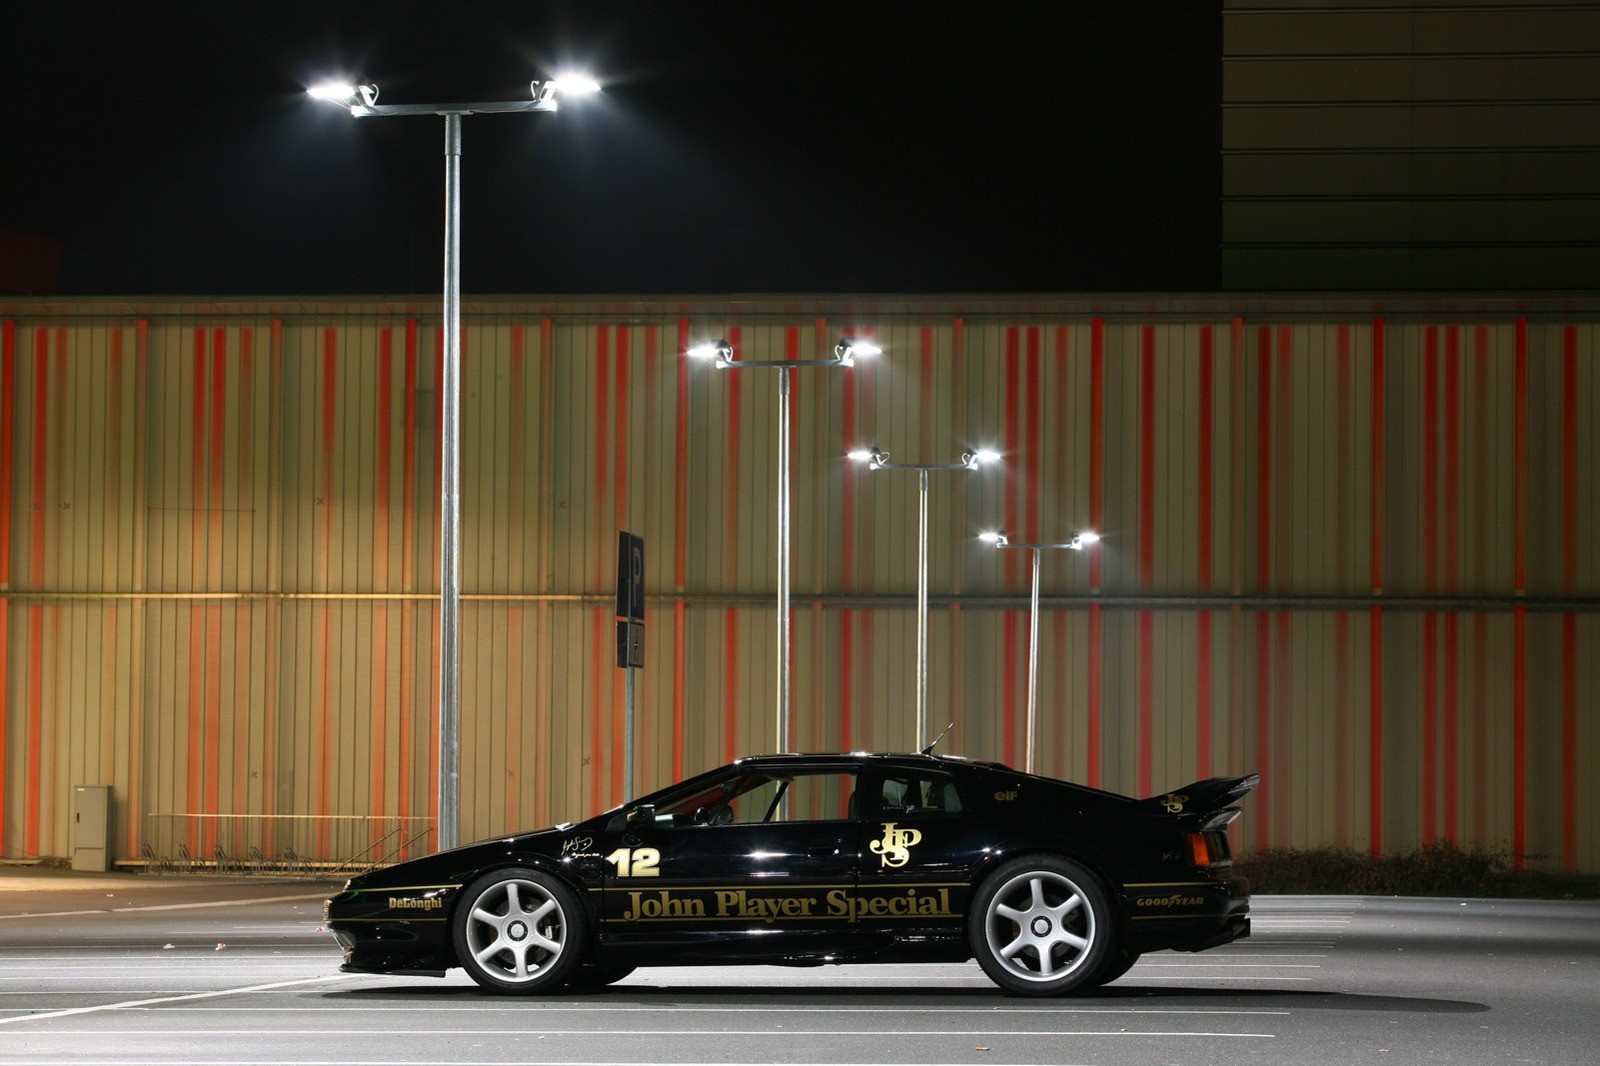 General 1600x1066 Lotus Lotus Esprit car night parking lot black cars vehicle British cars livery